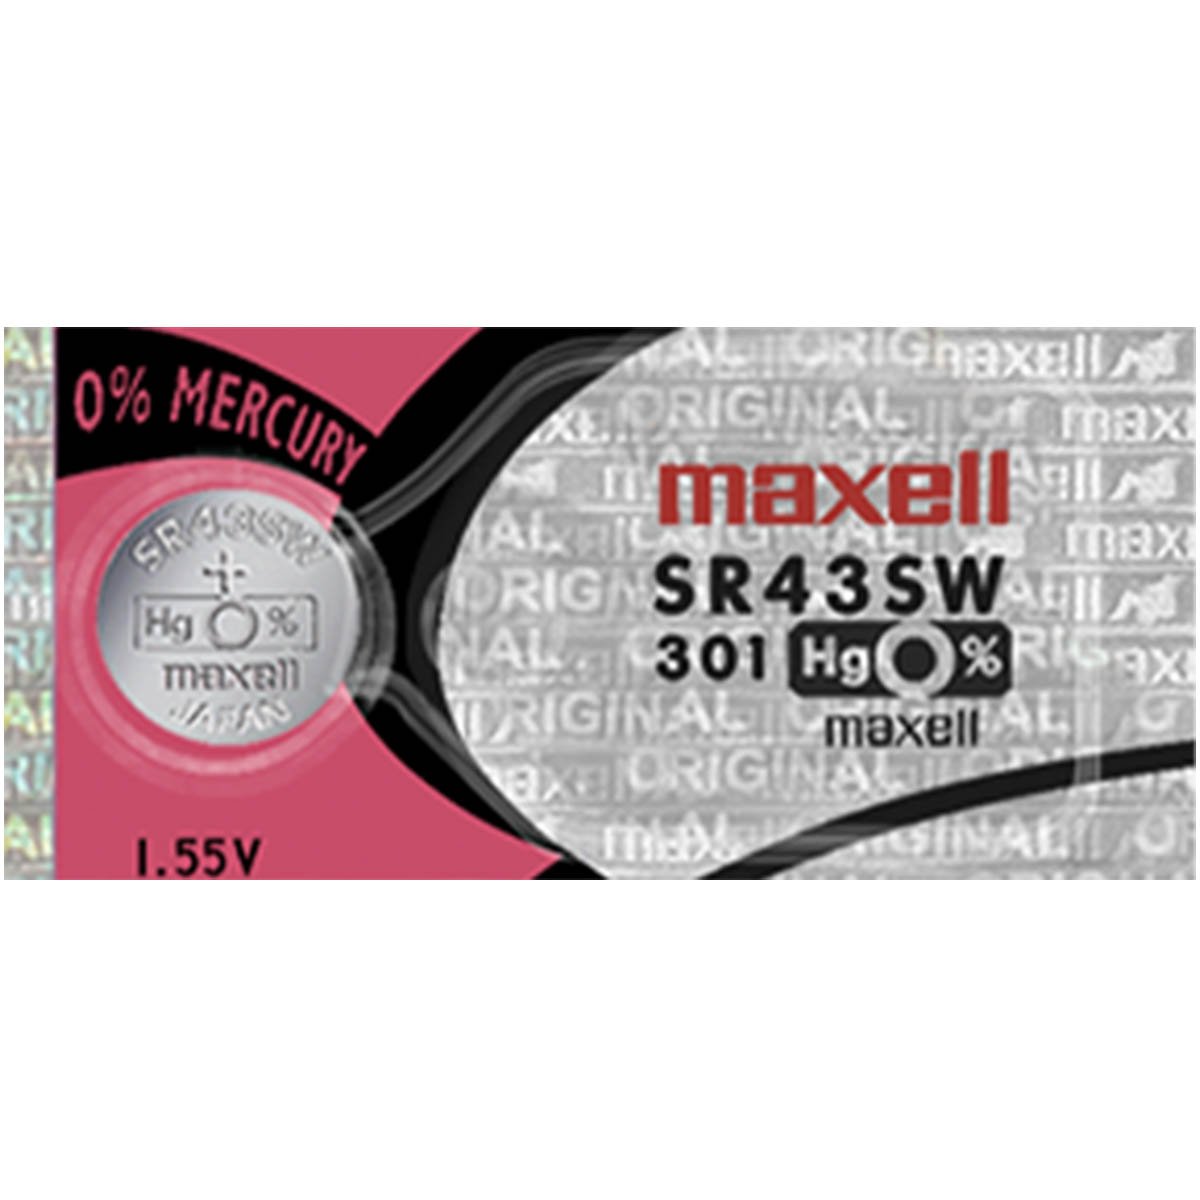 2 x Maxell 357 303 Pila Batteria Orologio Mercury Free Silver Oxide SR44W 1.55V 